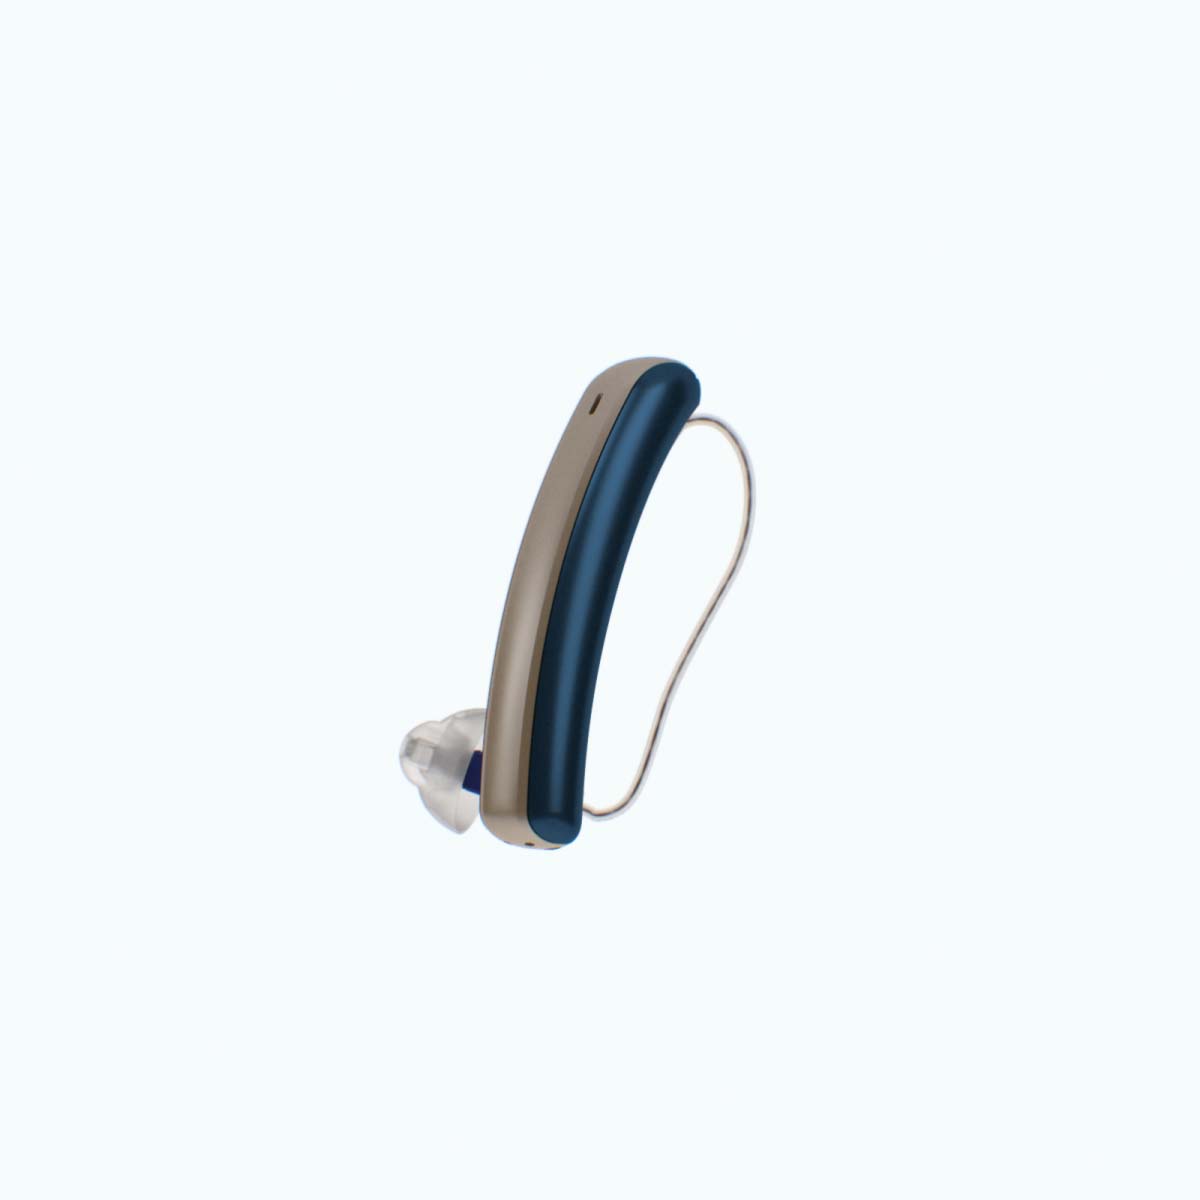 Innovative MEENERGY™ iRIC™ hearing aid